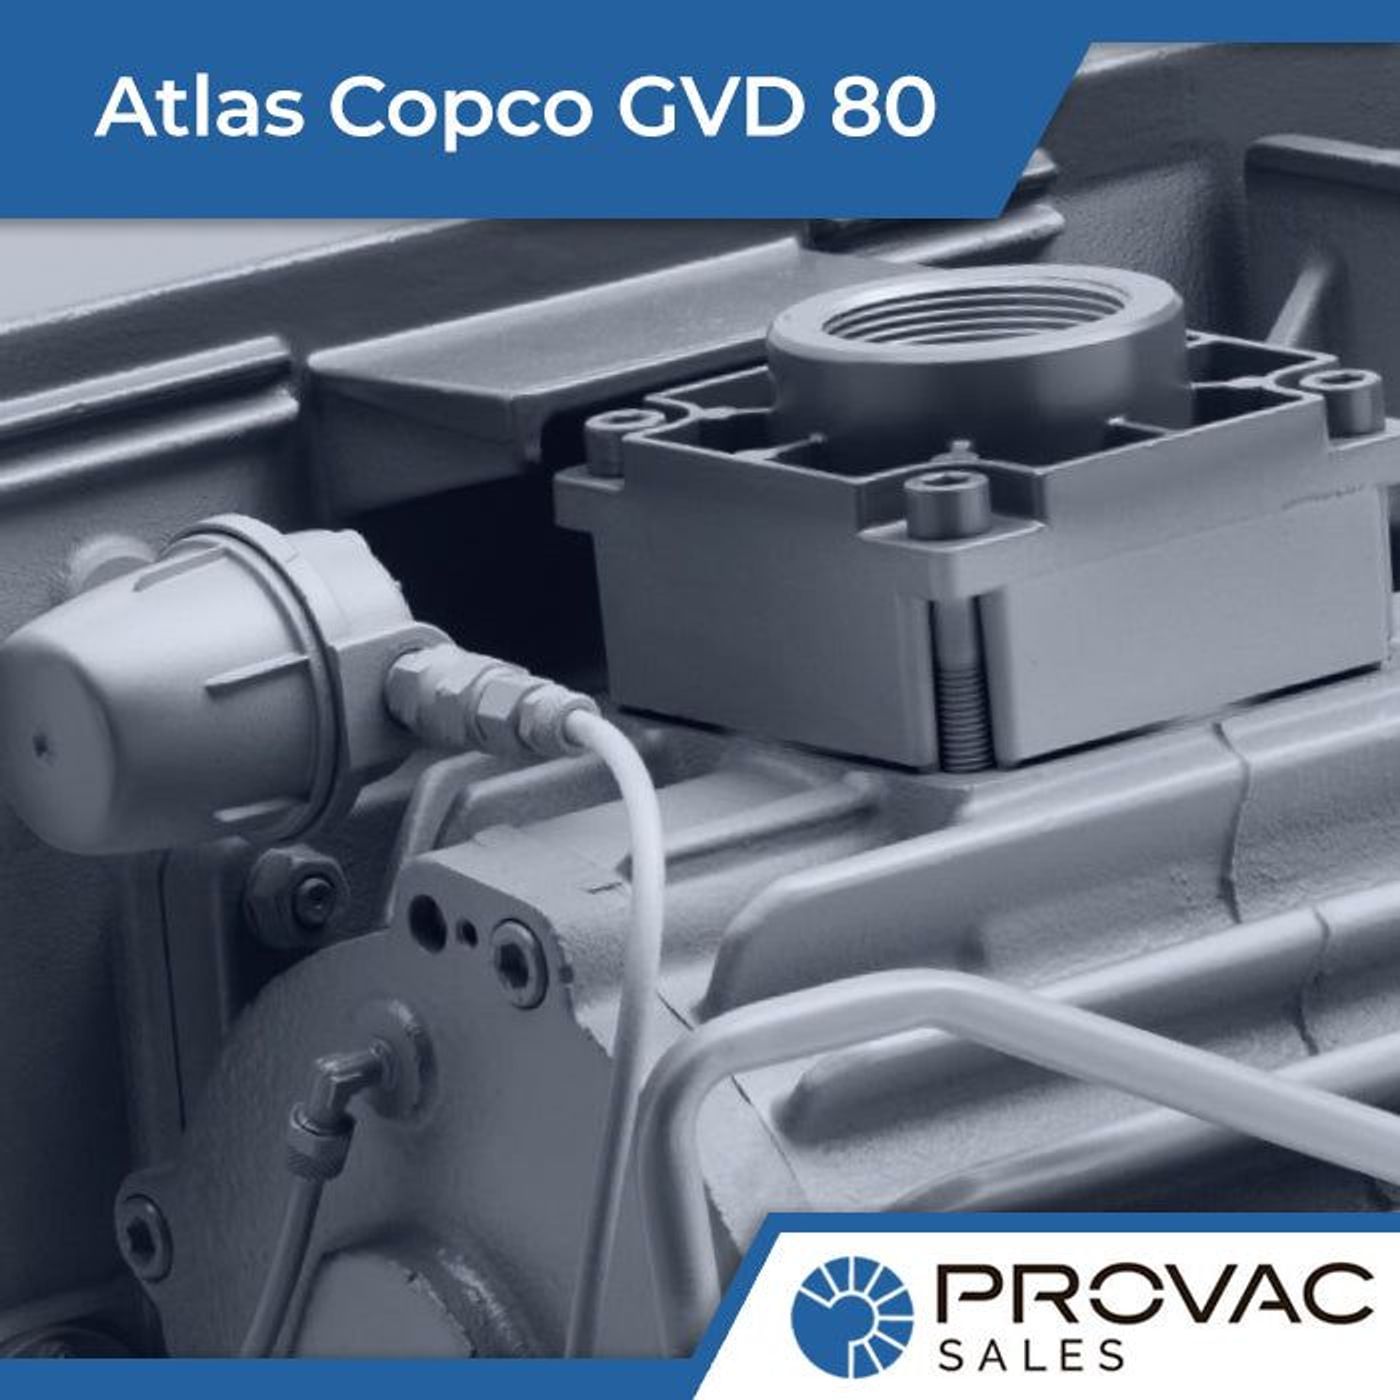 On Sale Now: Atlas Copco GVD 80 Rotary Vane Pump